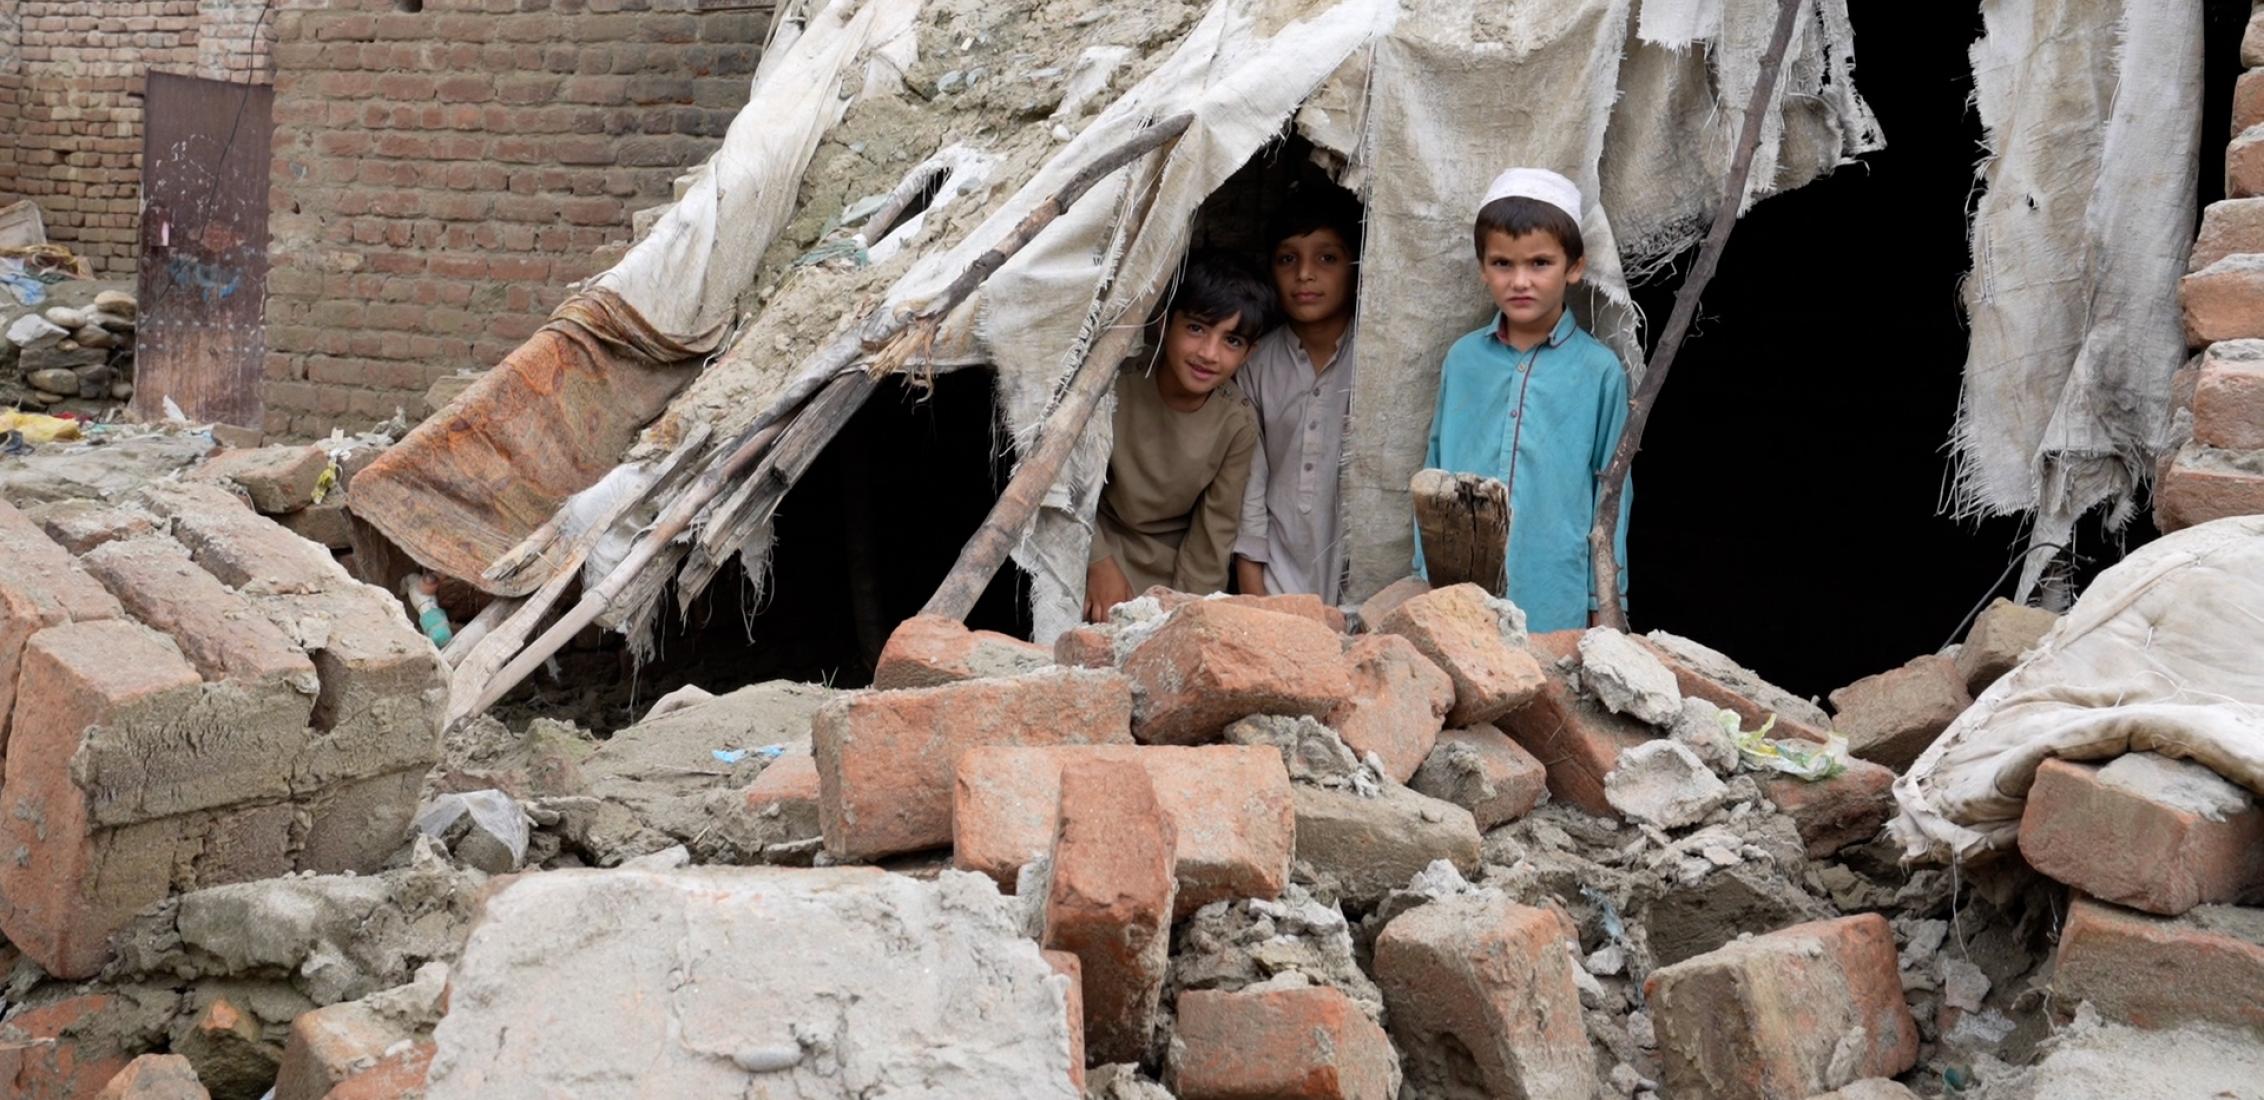 UN0693152/Fazel: في 22 أغسطس 2023، تجمع ثلاثة صبية تحت أنقاض منزلهم في جلال آباد، الذي دمرته الفيضانات الأخيرة في مقاطعة نانغارهار، شرق أفغانستان..